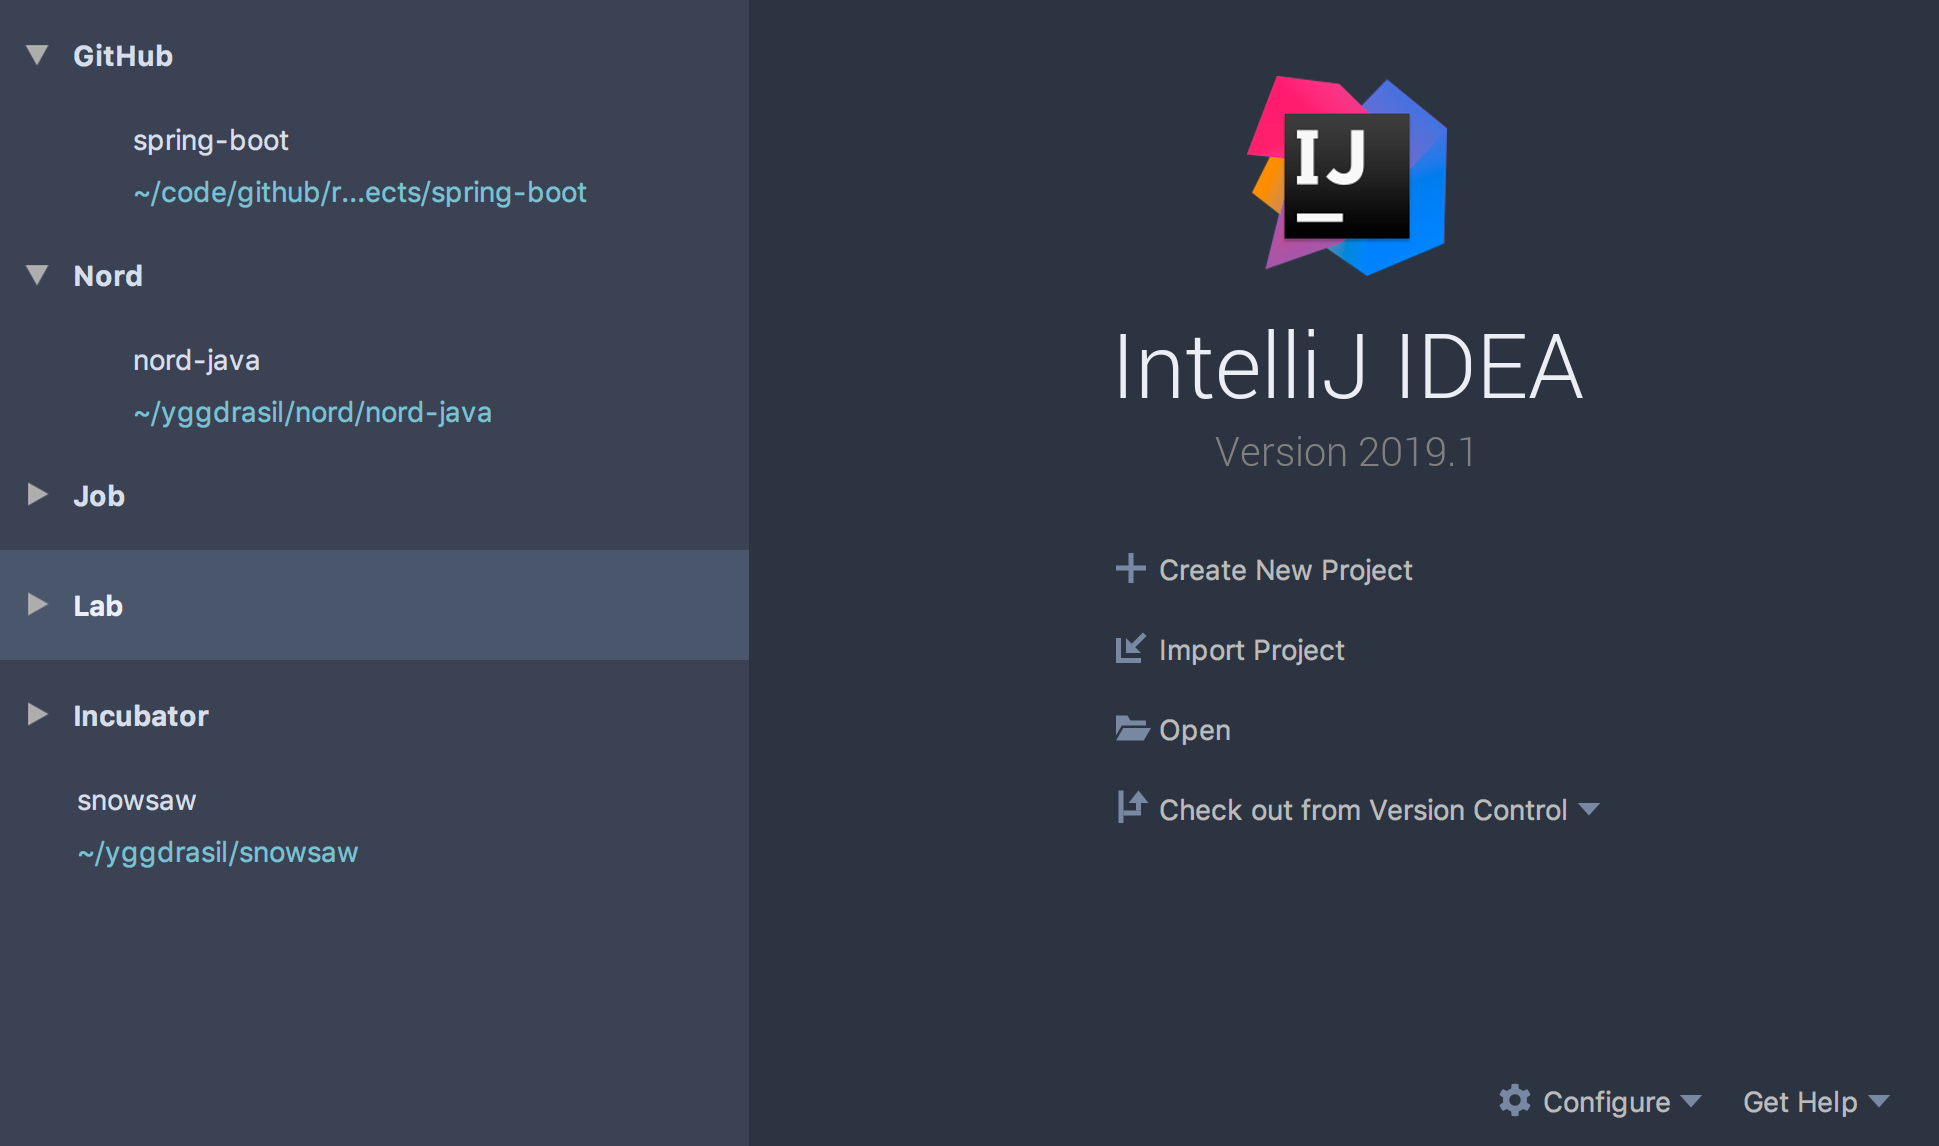 Screenshot showing the customized IDE welcome screen